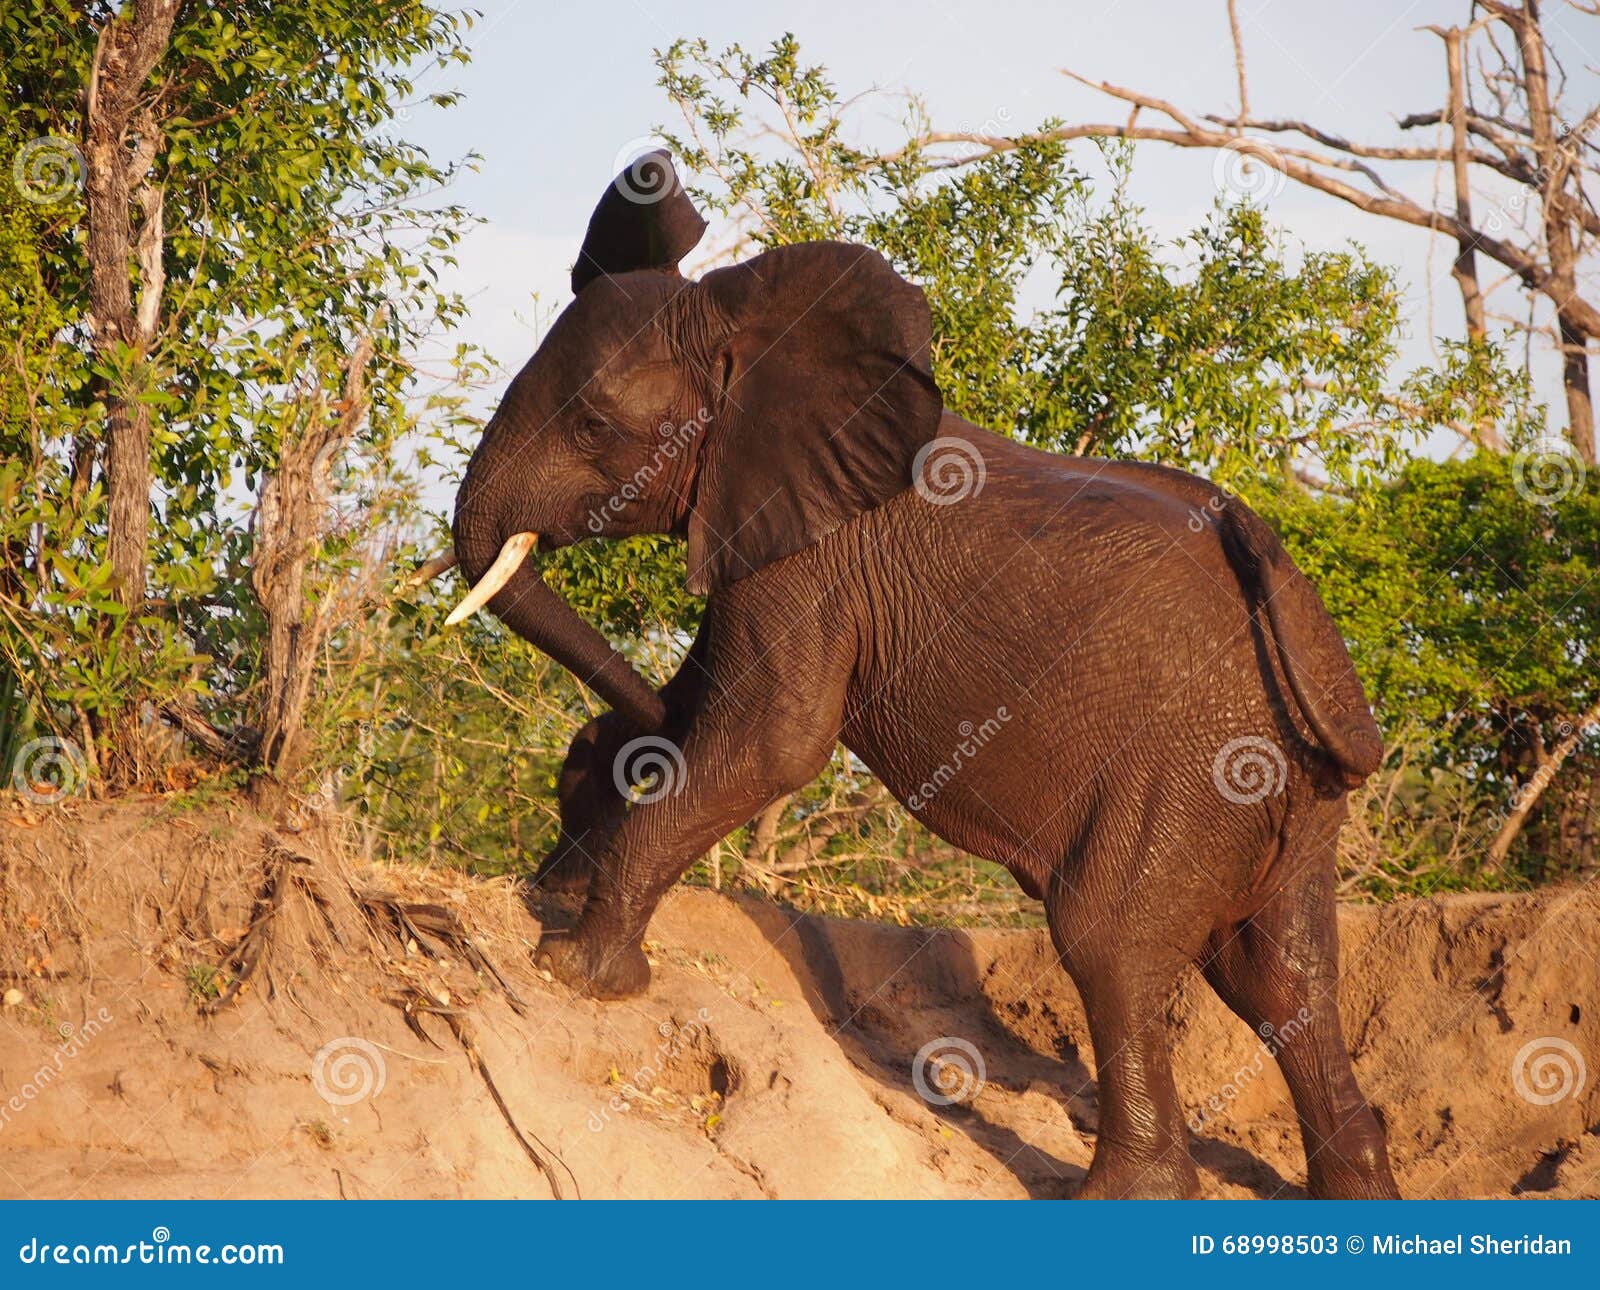 An elephant can climb. Слон залез на дерево. Слон лезет на дерево. Слоны карабкаться по деревьям.